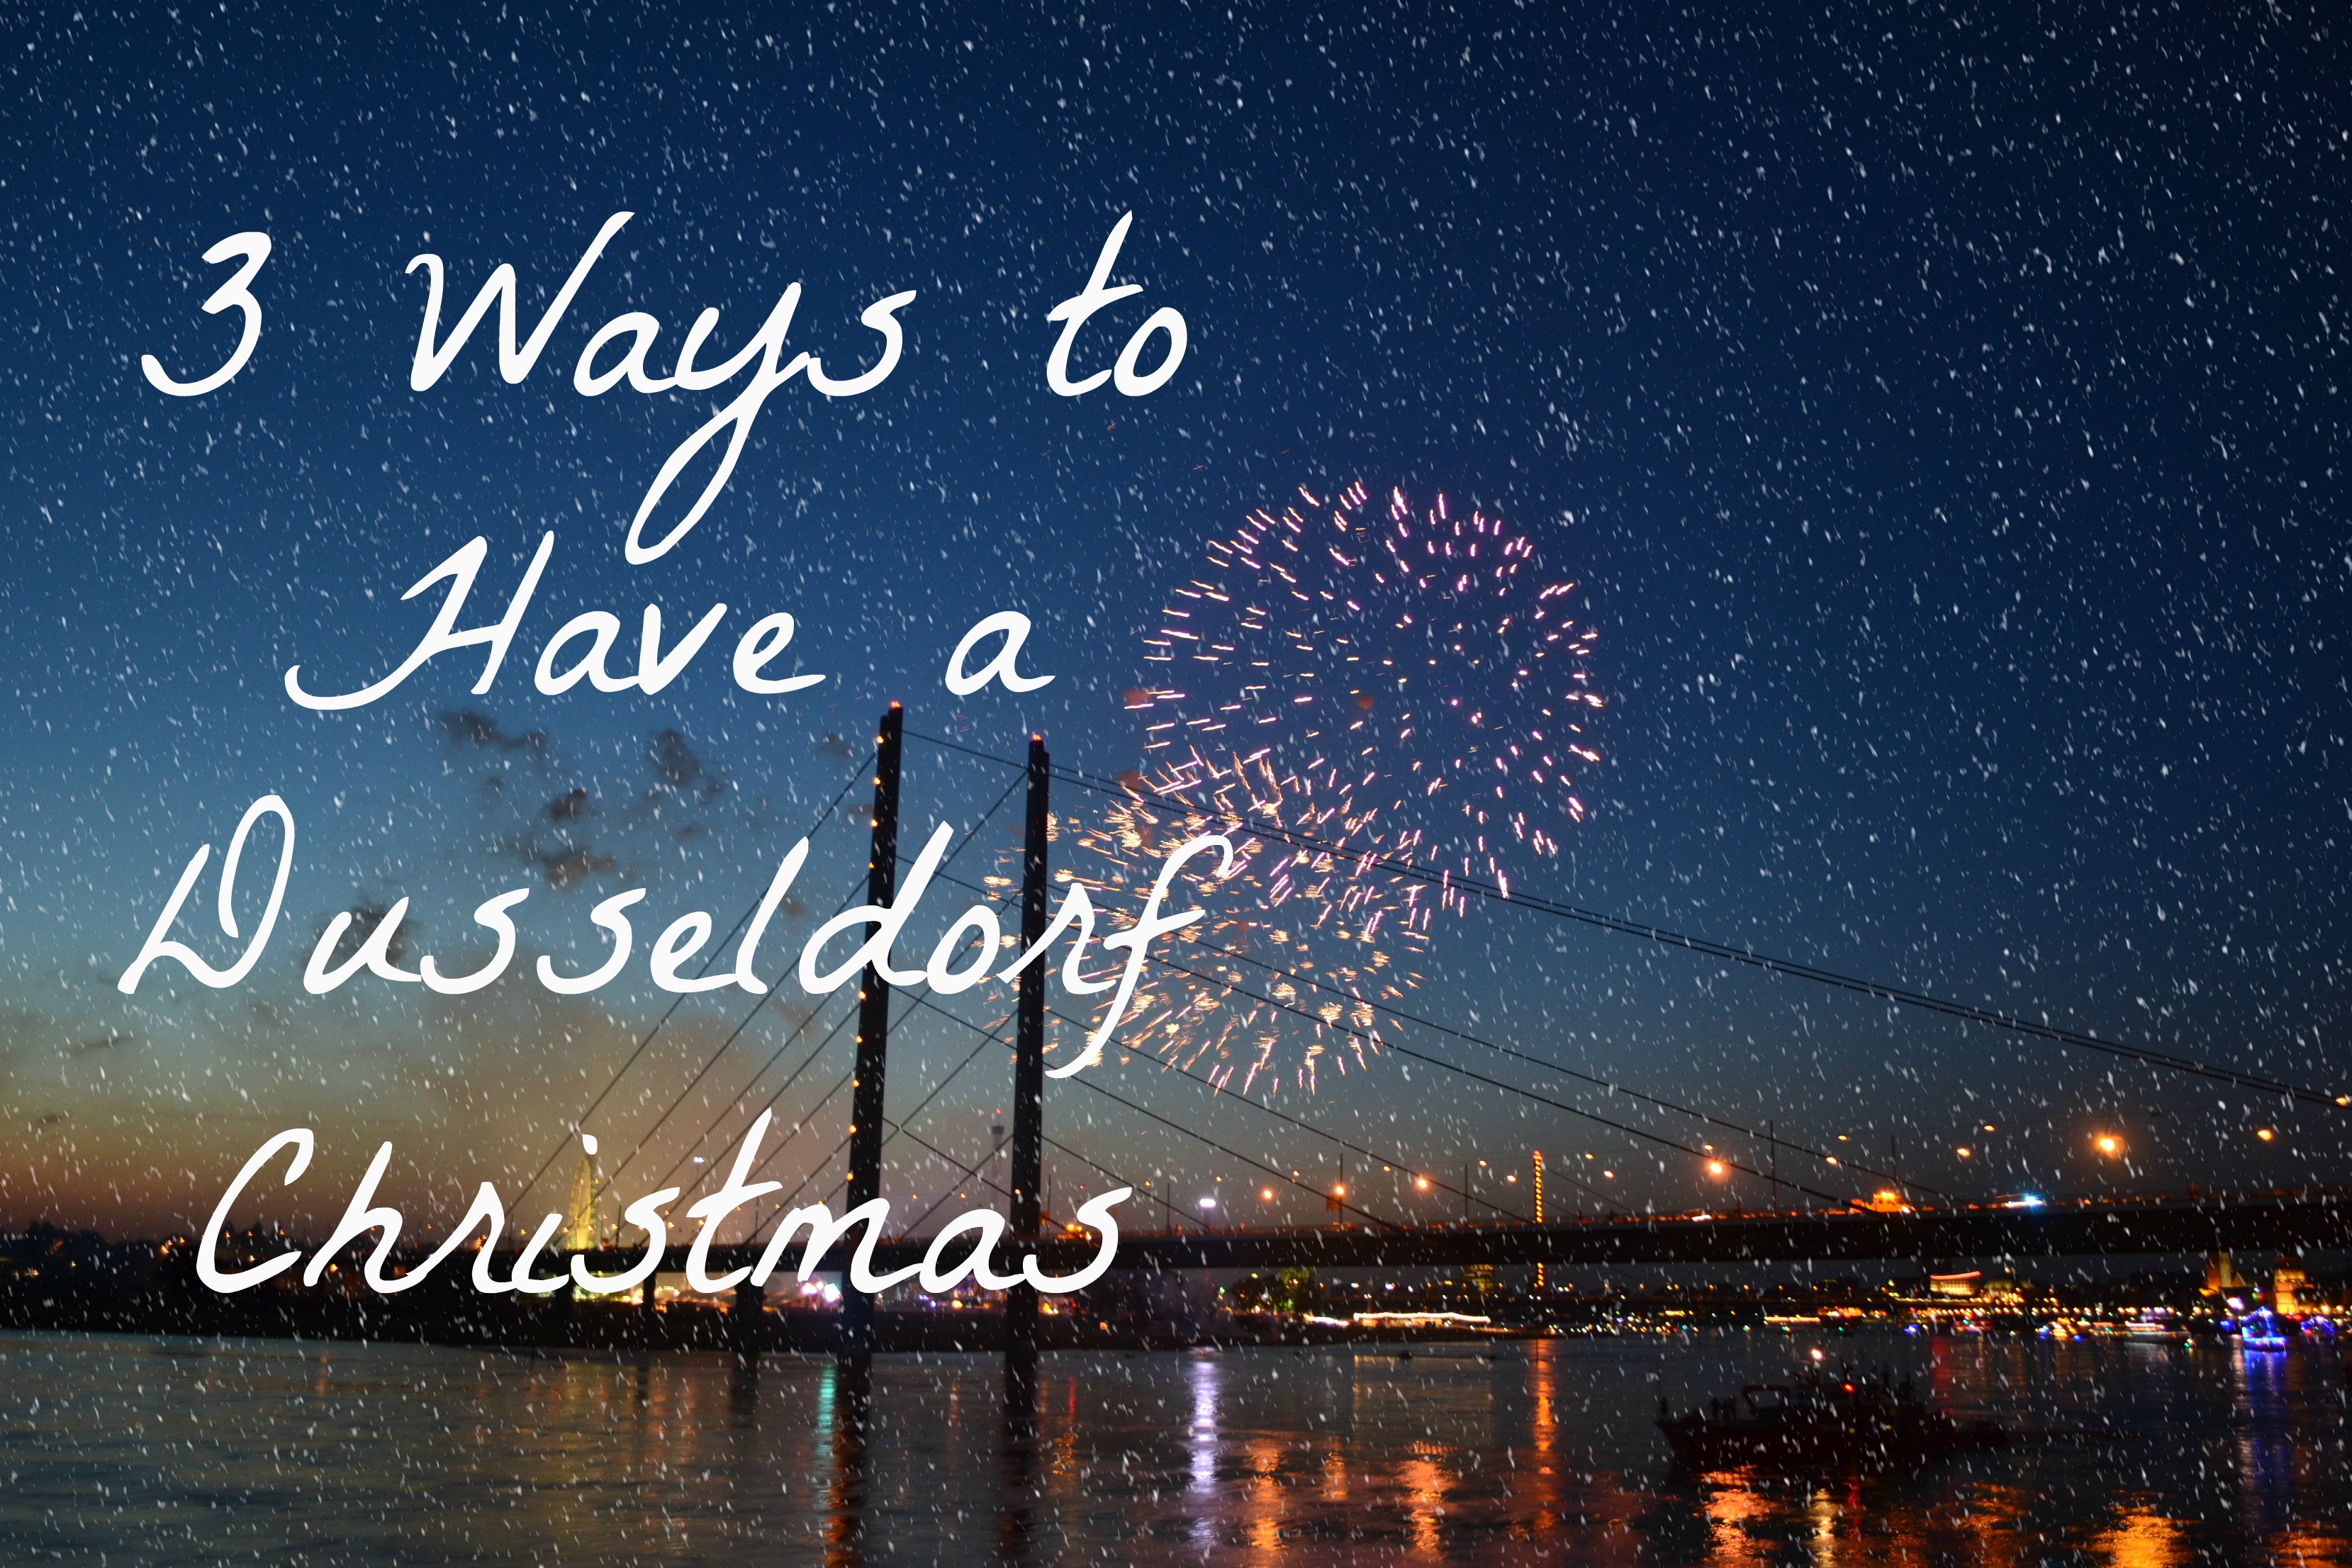 3 Ways to Have a Wonderful Dusseldorf Christmas